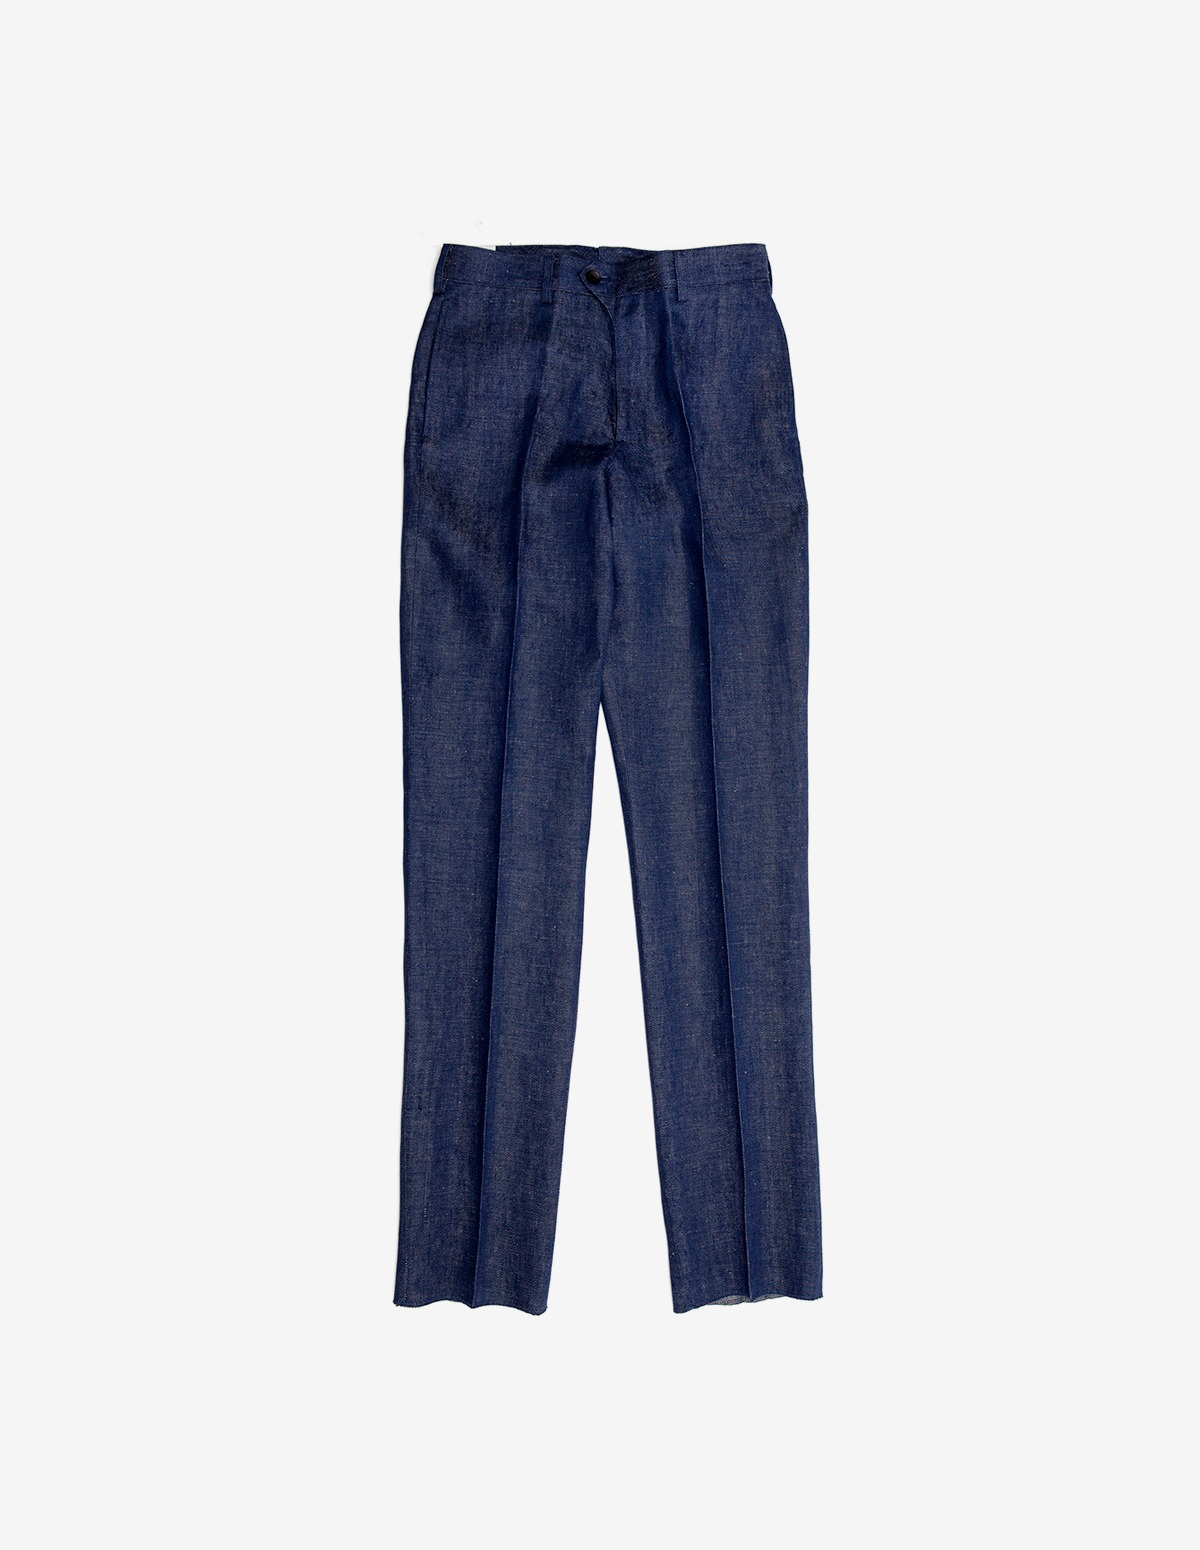 OR-1085B Indigo Linen Trousers